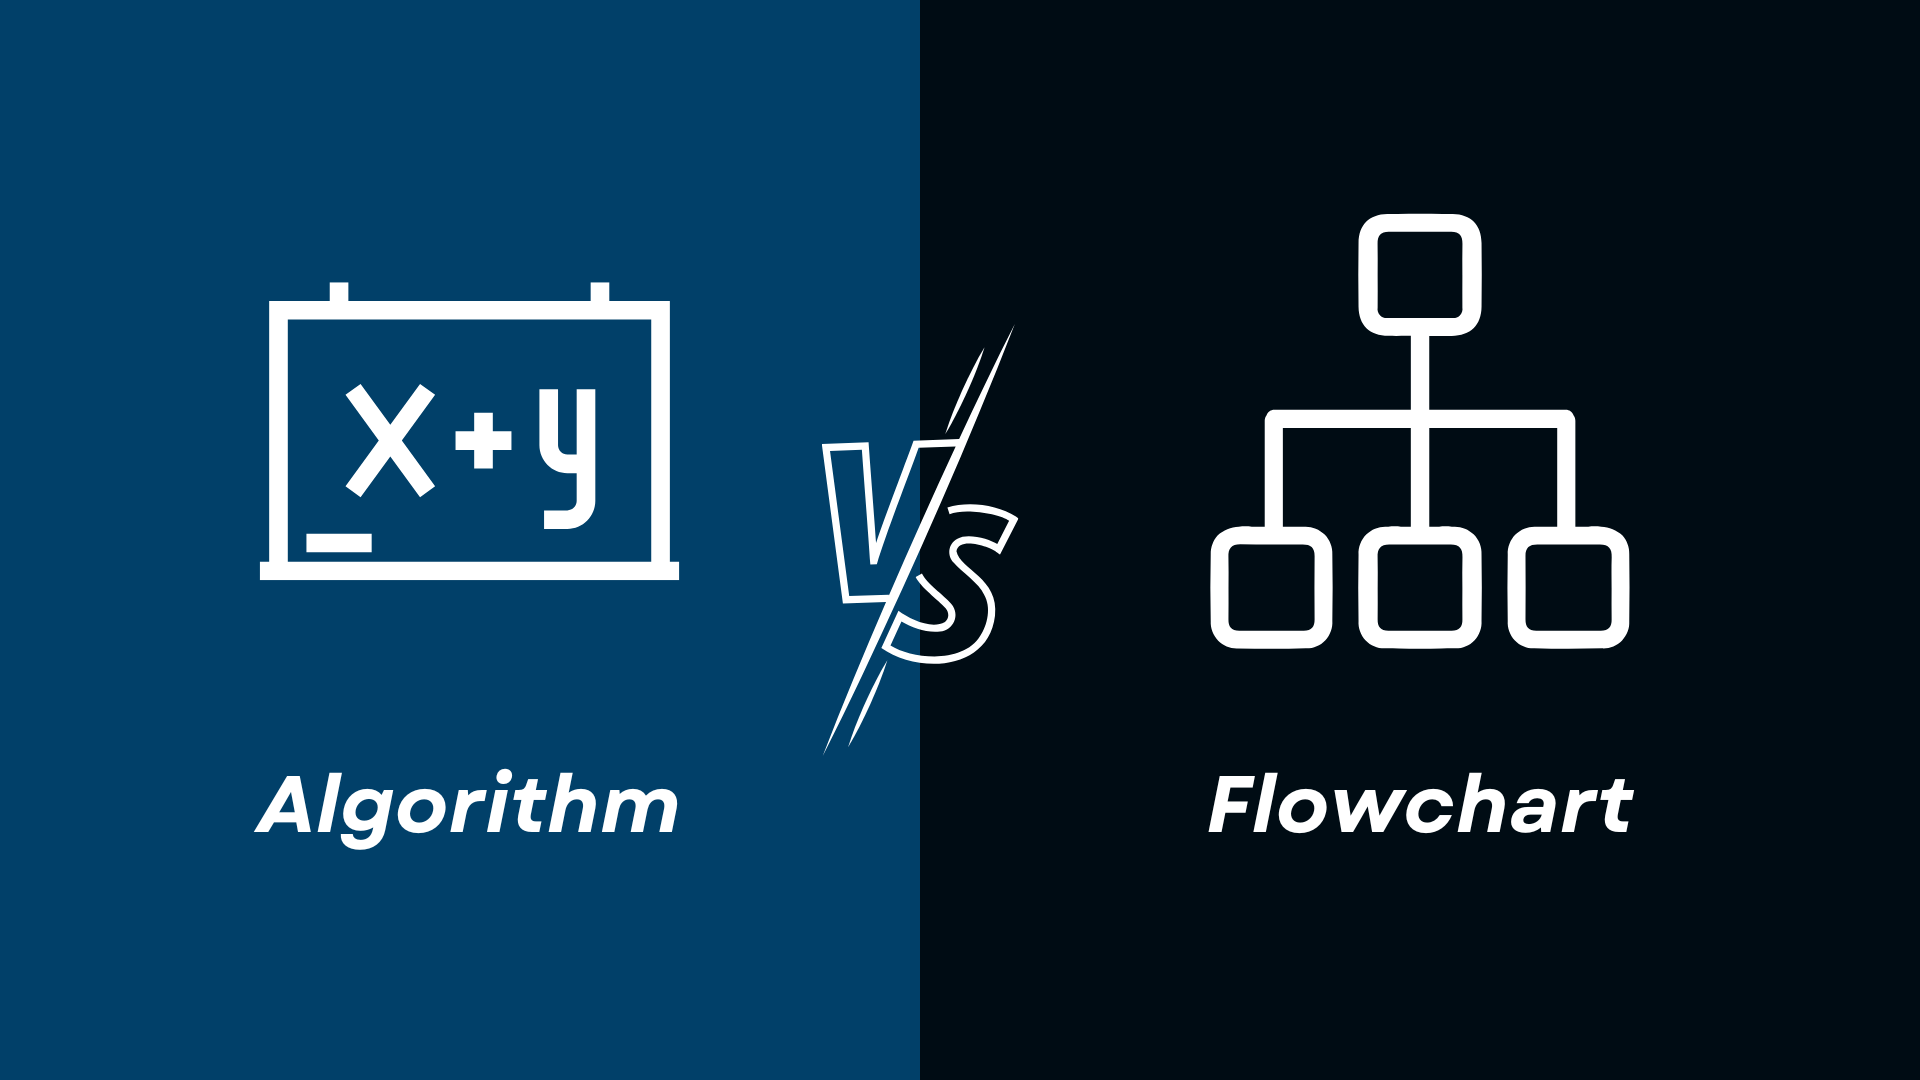 Algorithm and Flowchart: Differences Explained